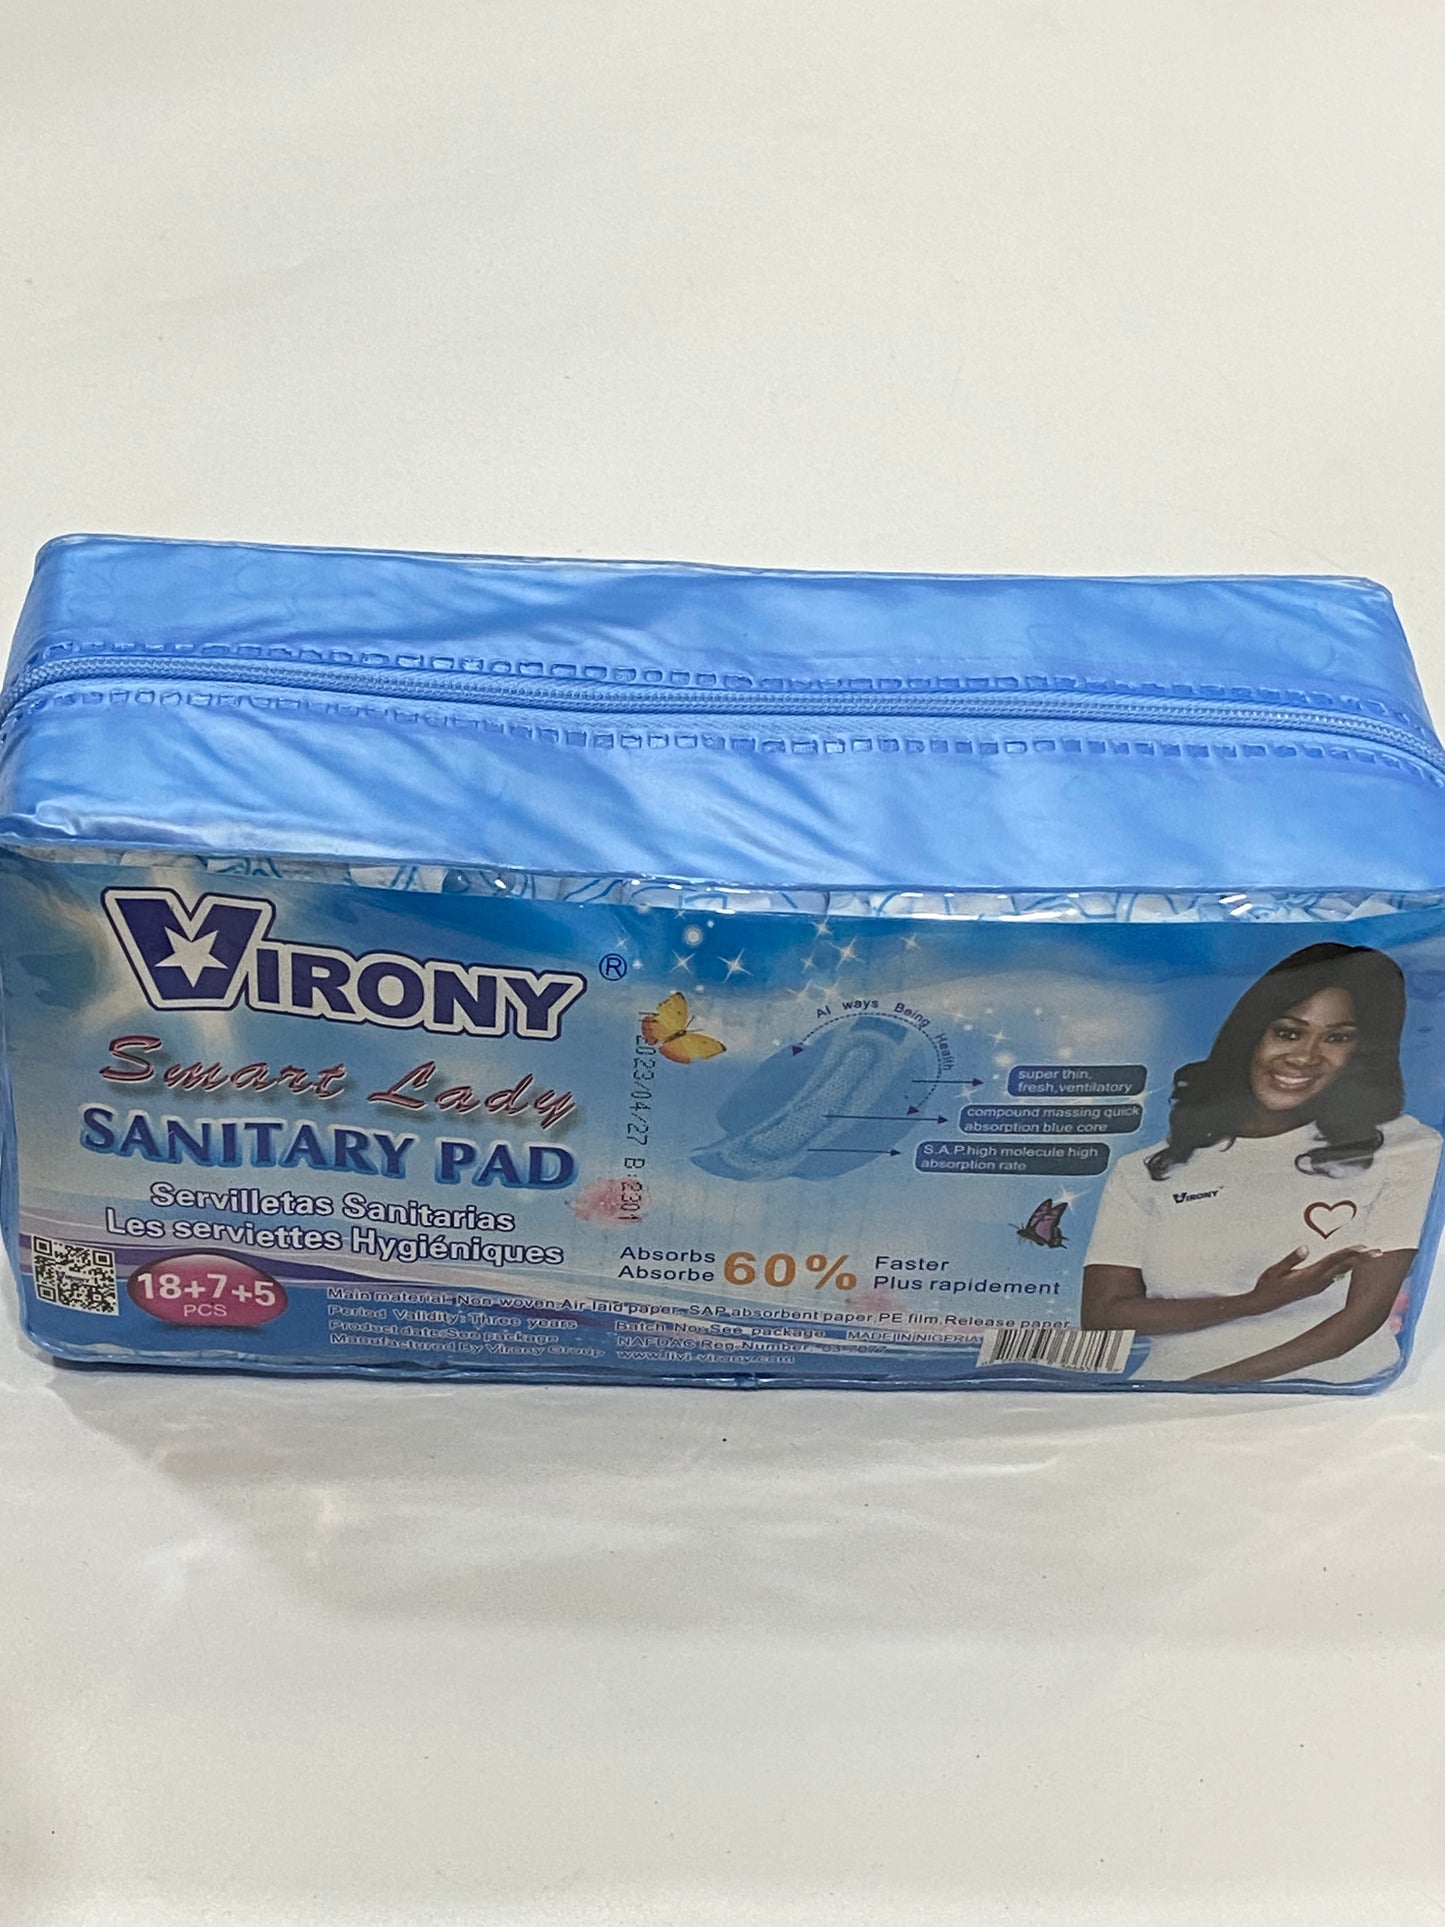 Virony Smart Lady Sanitary Pad